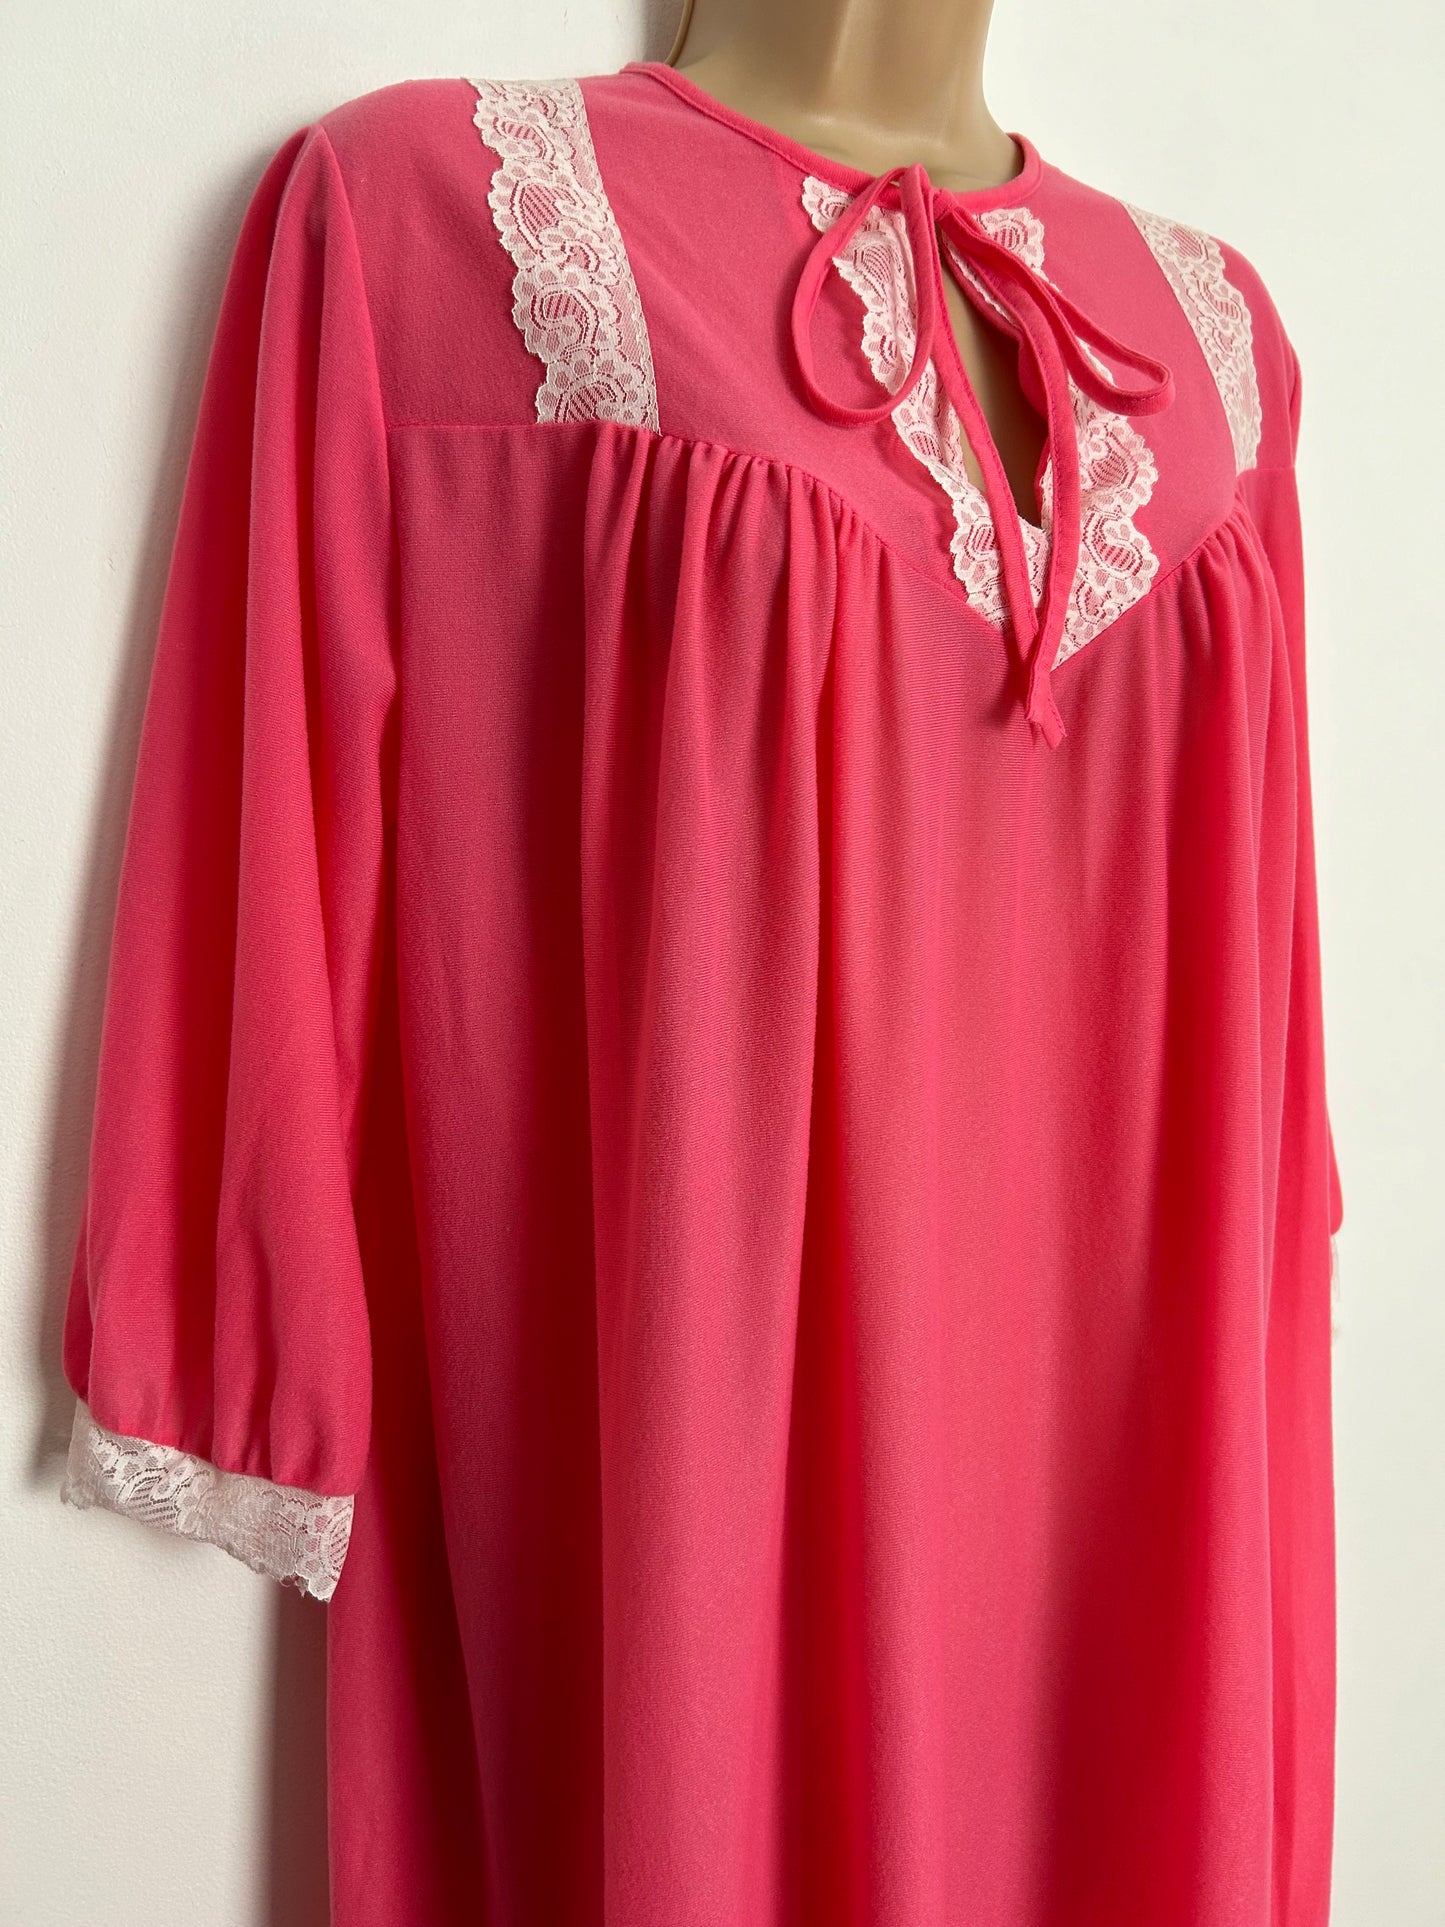 Vintage 1960s  UK Size 12-14 Candy Pink Lace Trim Tie Neck Brushed Nylon 3/4 Sleeve Full Length Nightie Nightdress